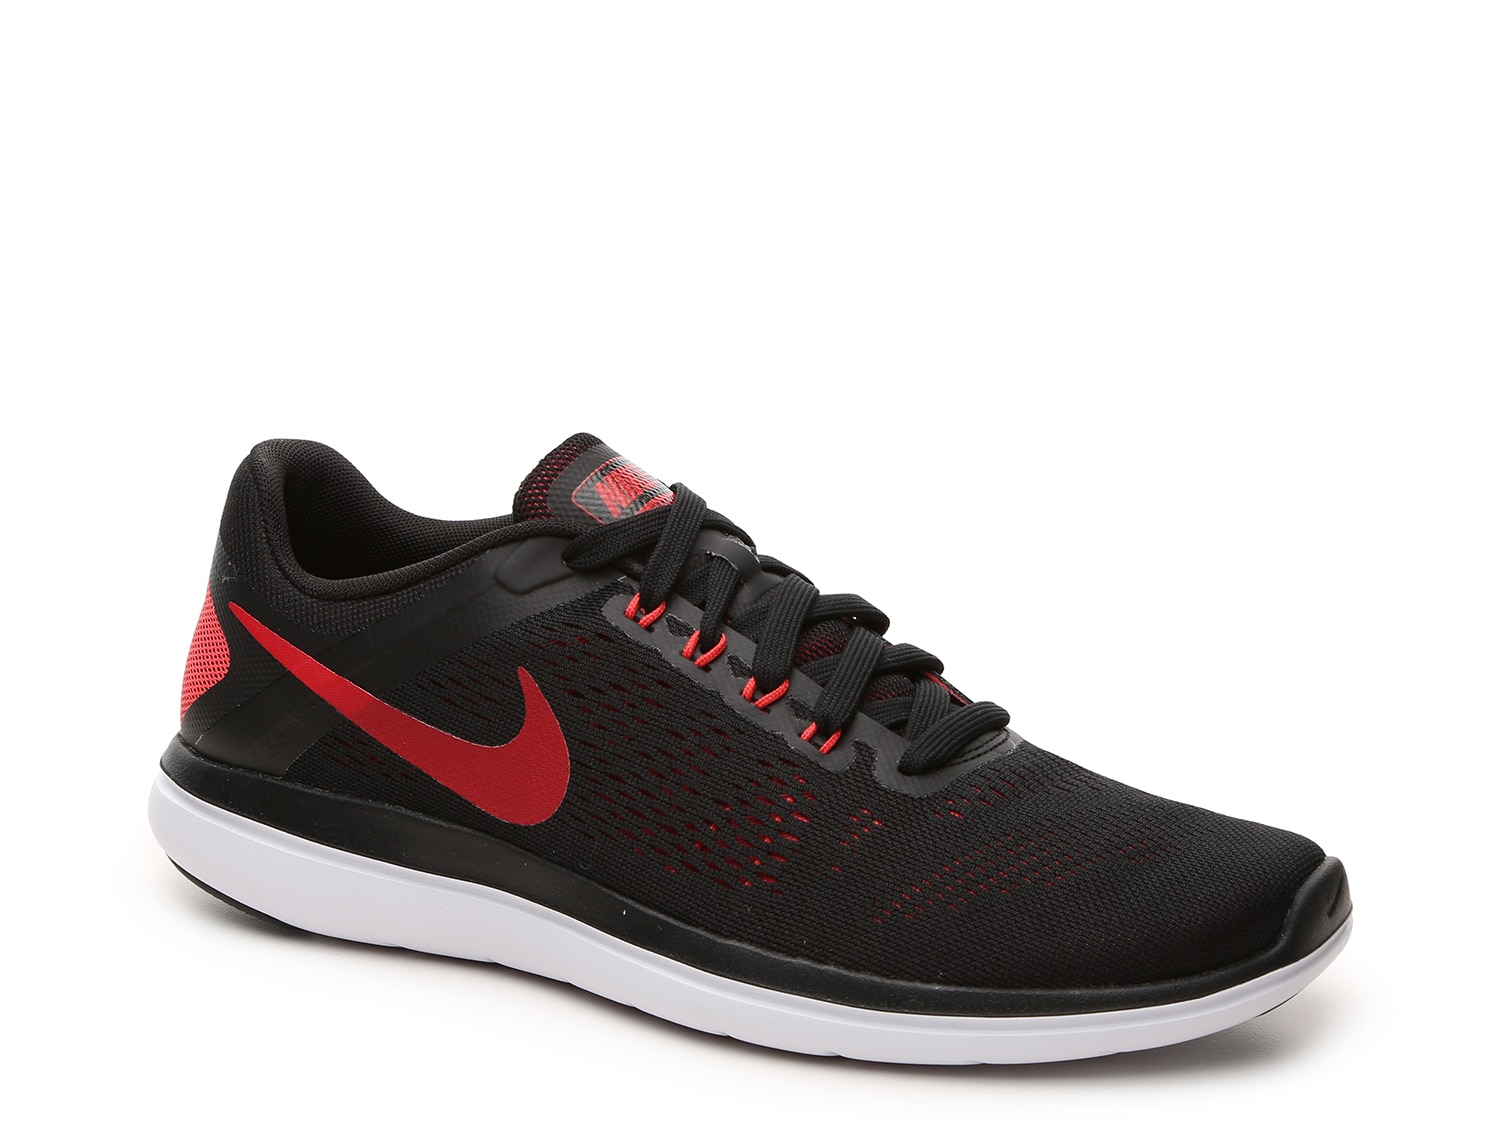 Nike Flex 2016 RN Lightweight Running Shoe - Men's - Free Shipping